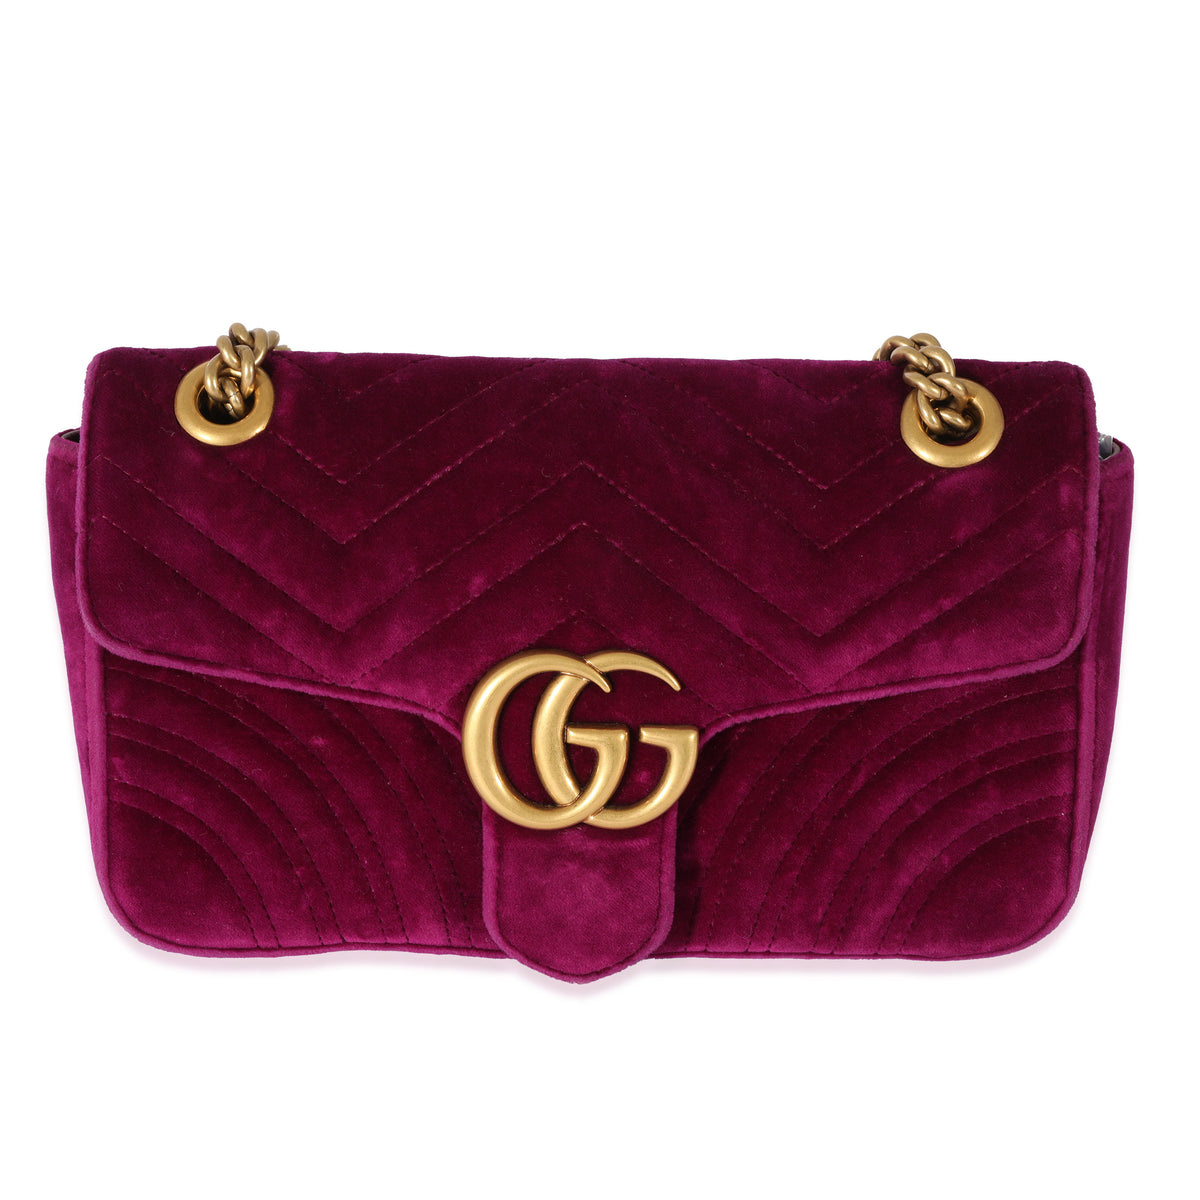 New Gucci marmont bag 22 Pink glitter